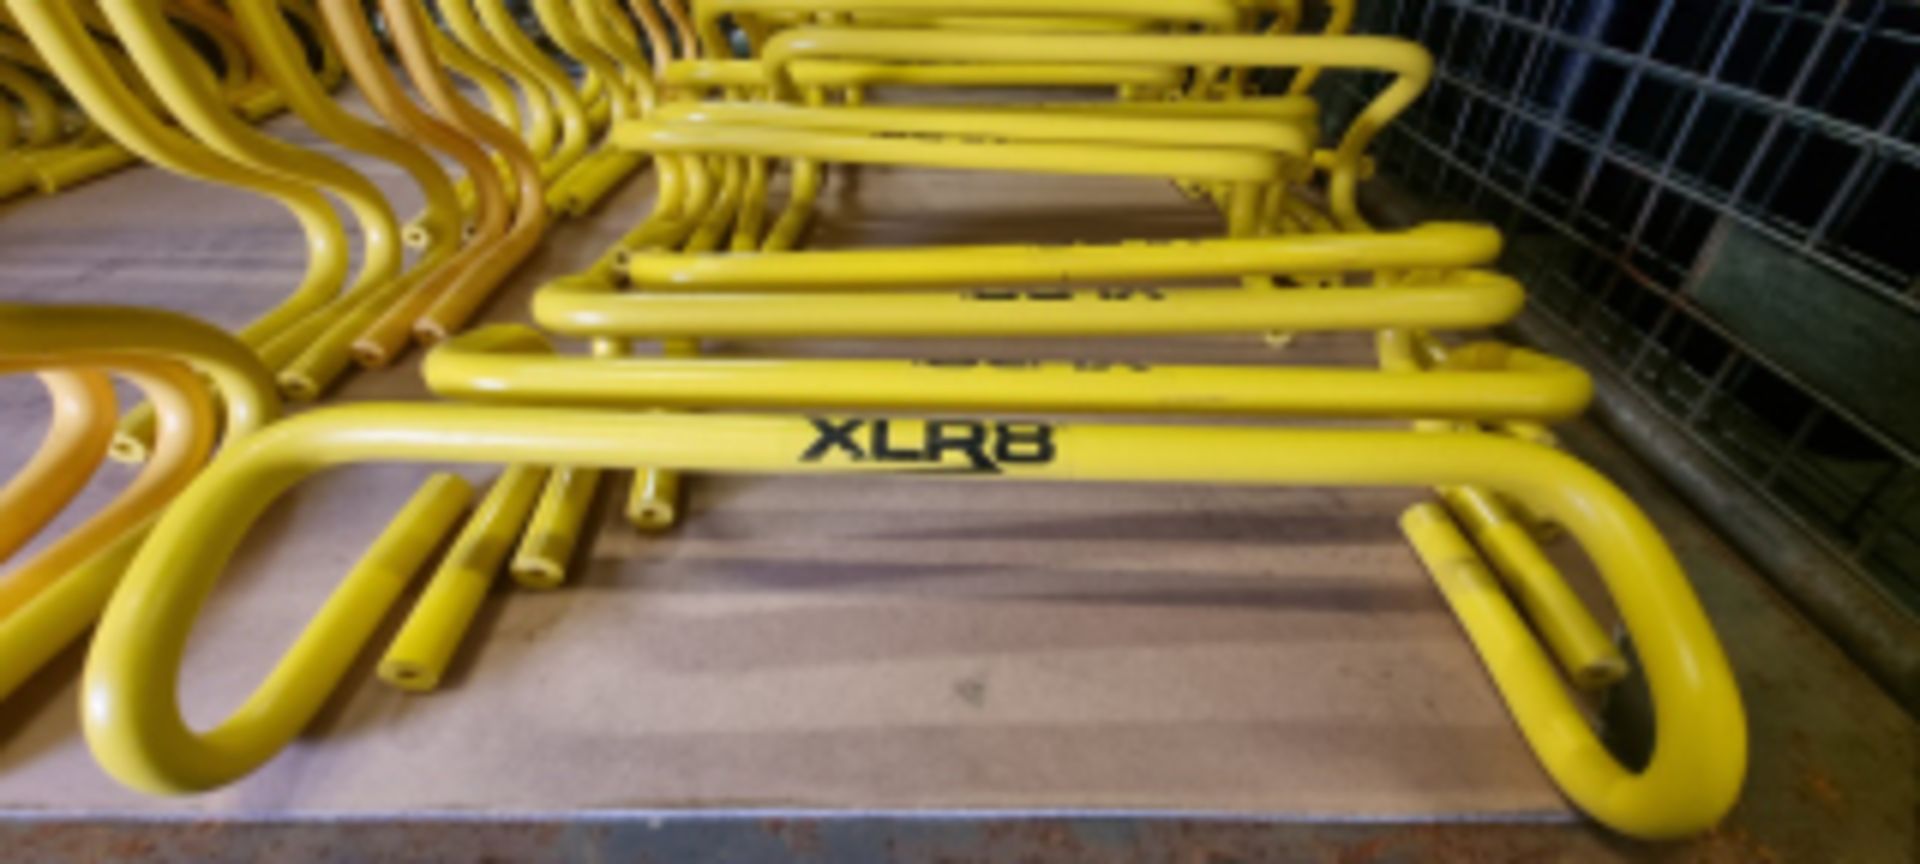 XLR8 yellow plastic training hurdles small - medium 36 units - Image 3 of 3